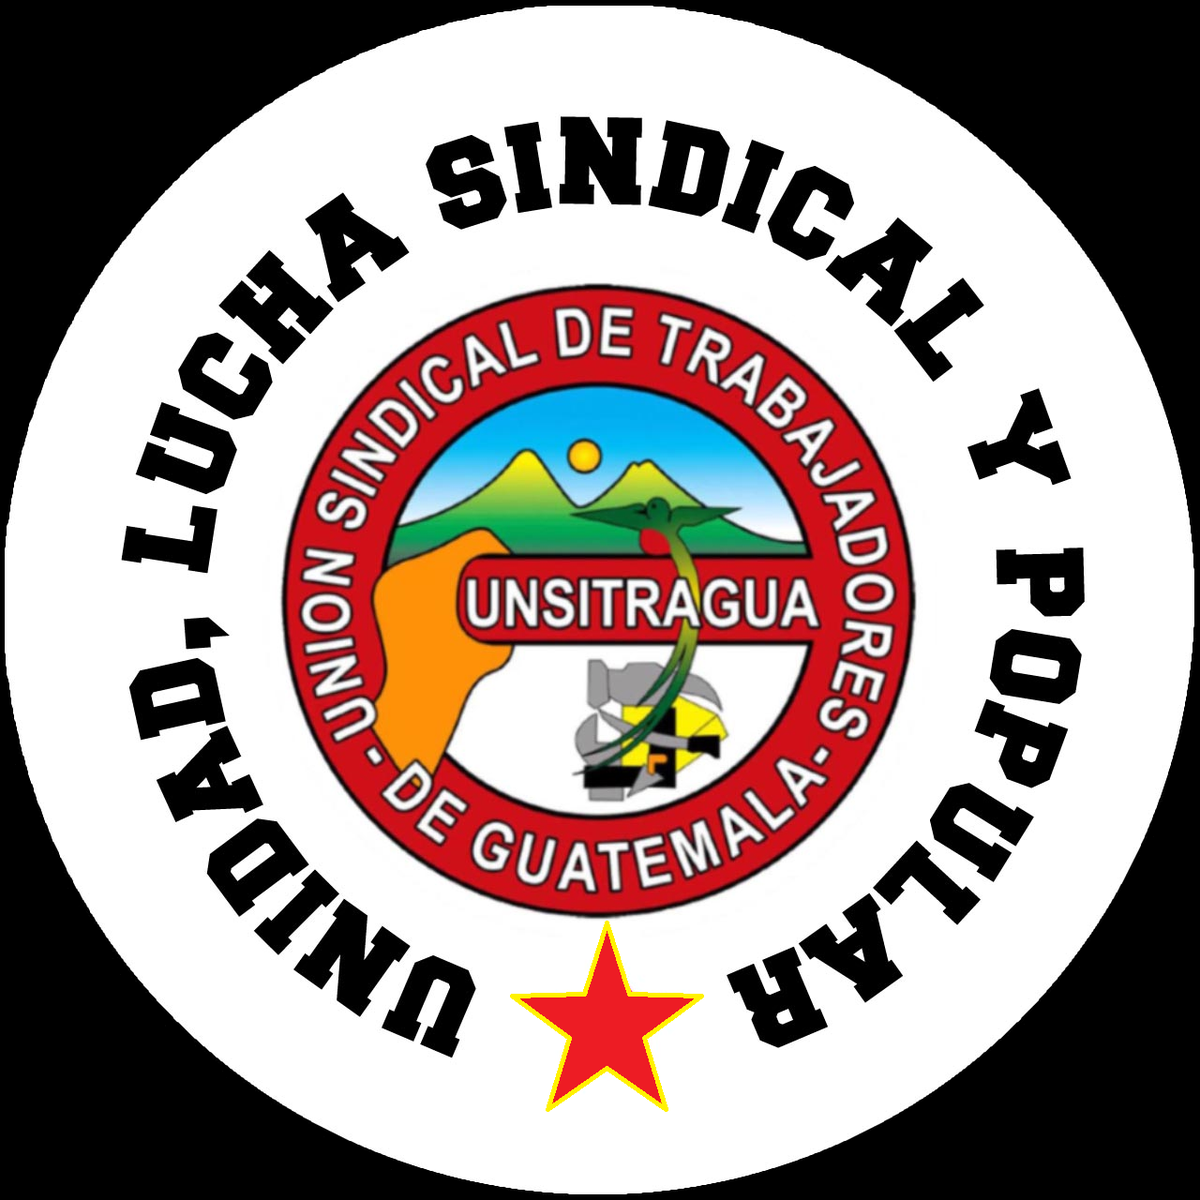 Unsitragua Histórica (@UnsitraguaH) on Twitter photo 2015-02-03 23:23:35